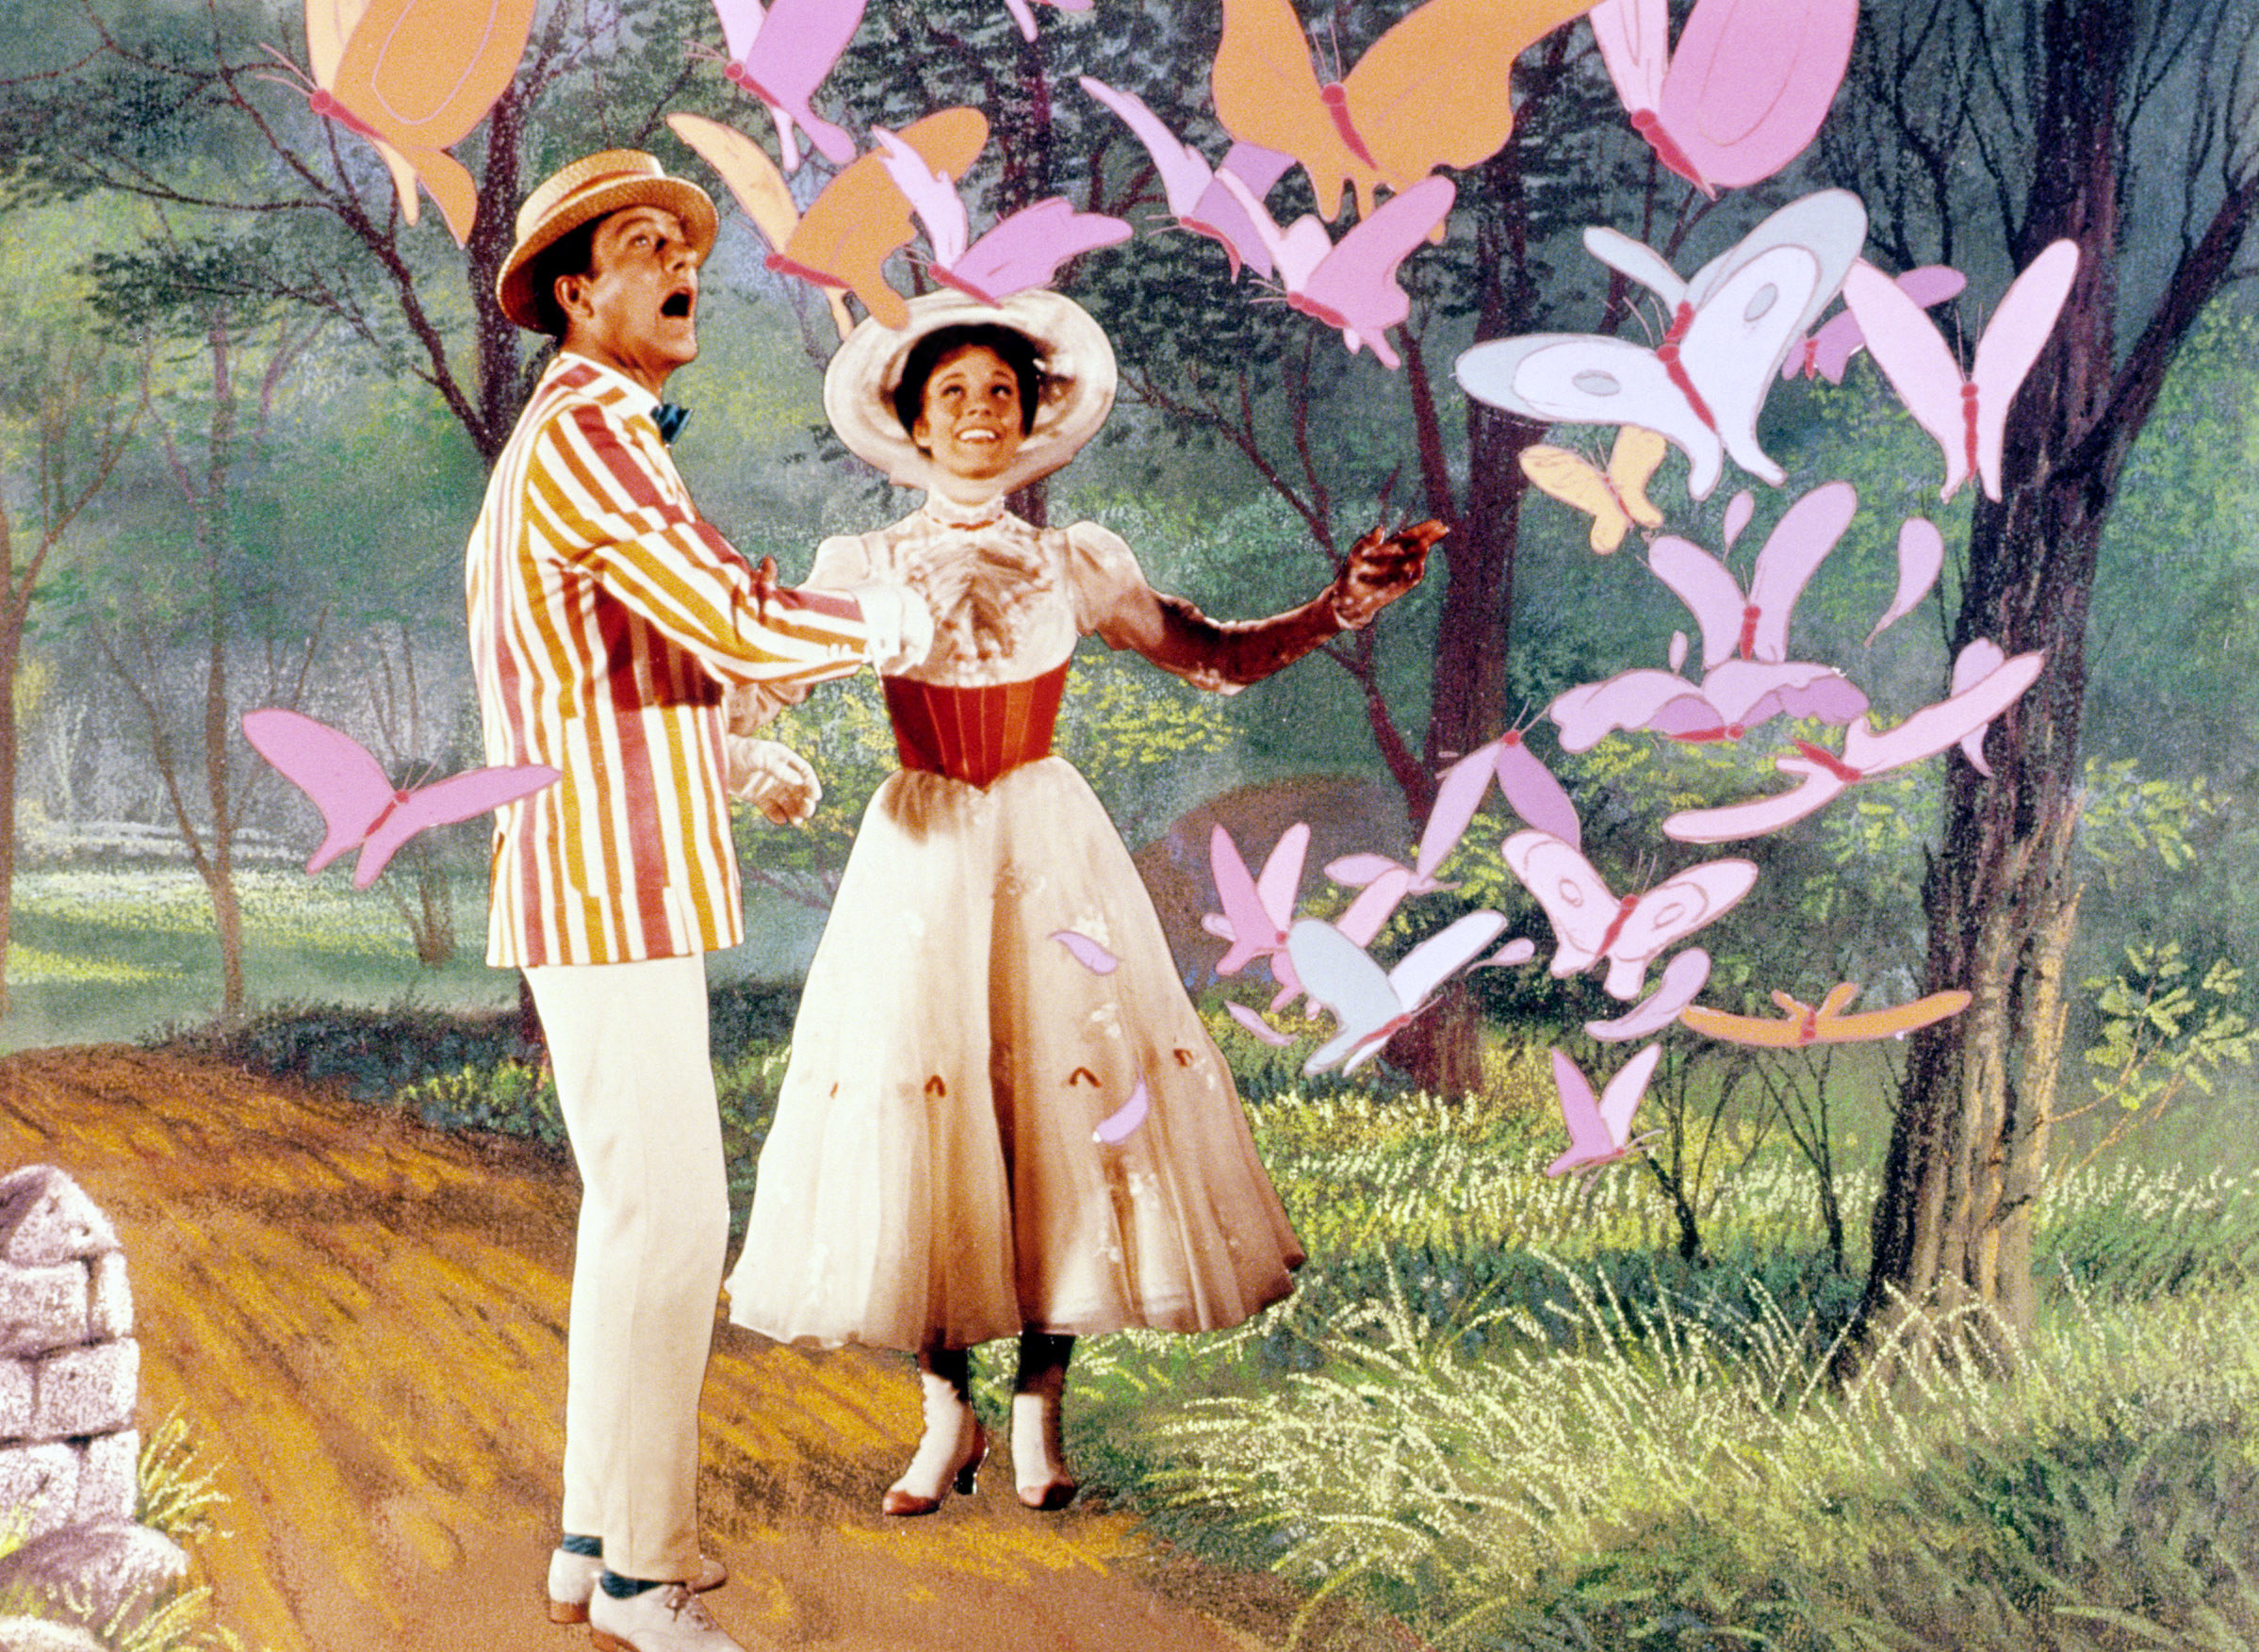 Burt and Mary Poppins